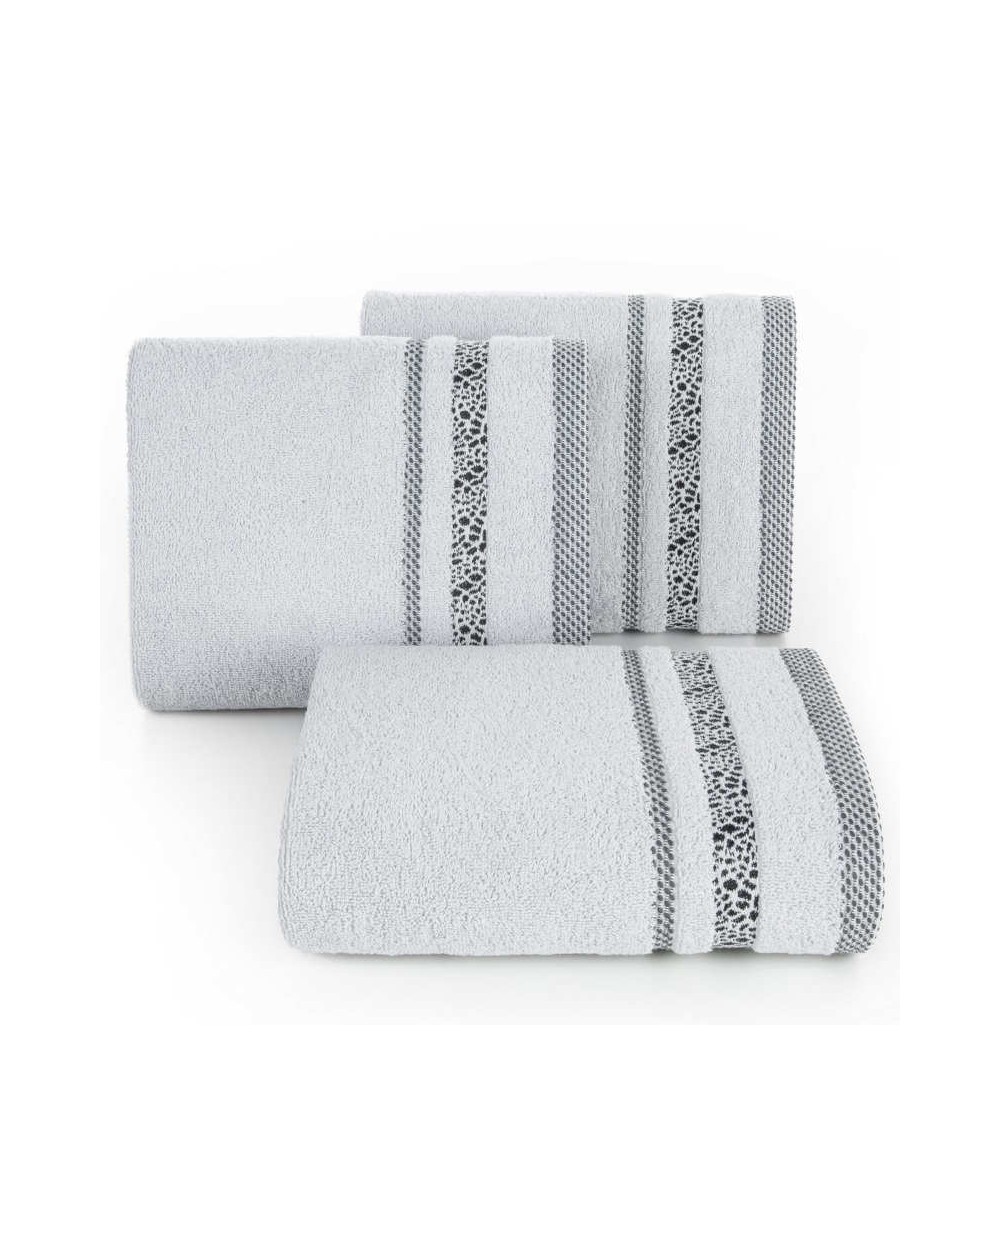 Ręcznik bawełna 70x140 Tessa srebrny